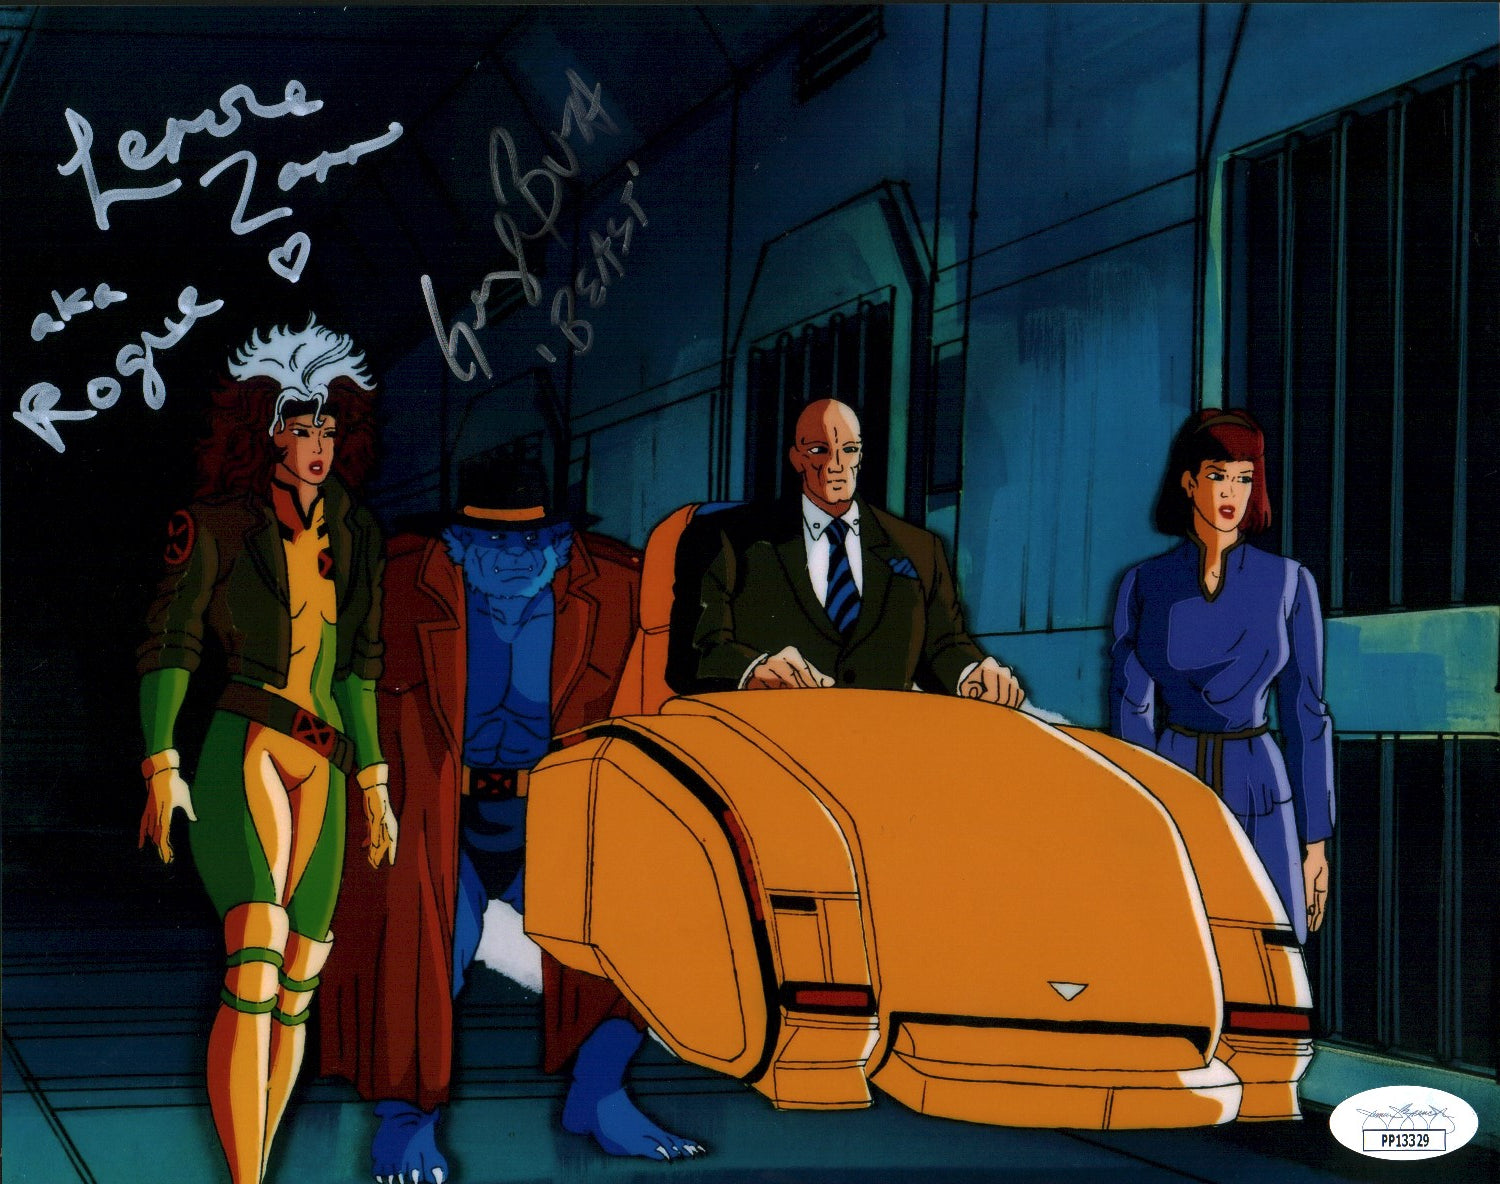 X-Men Animated 8x10 Photo Signed Buza DISHER Autograph JSA Certified COA Auto